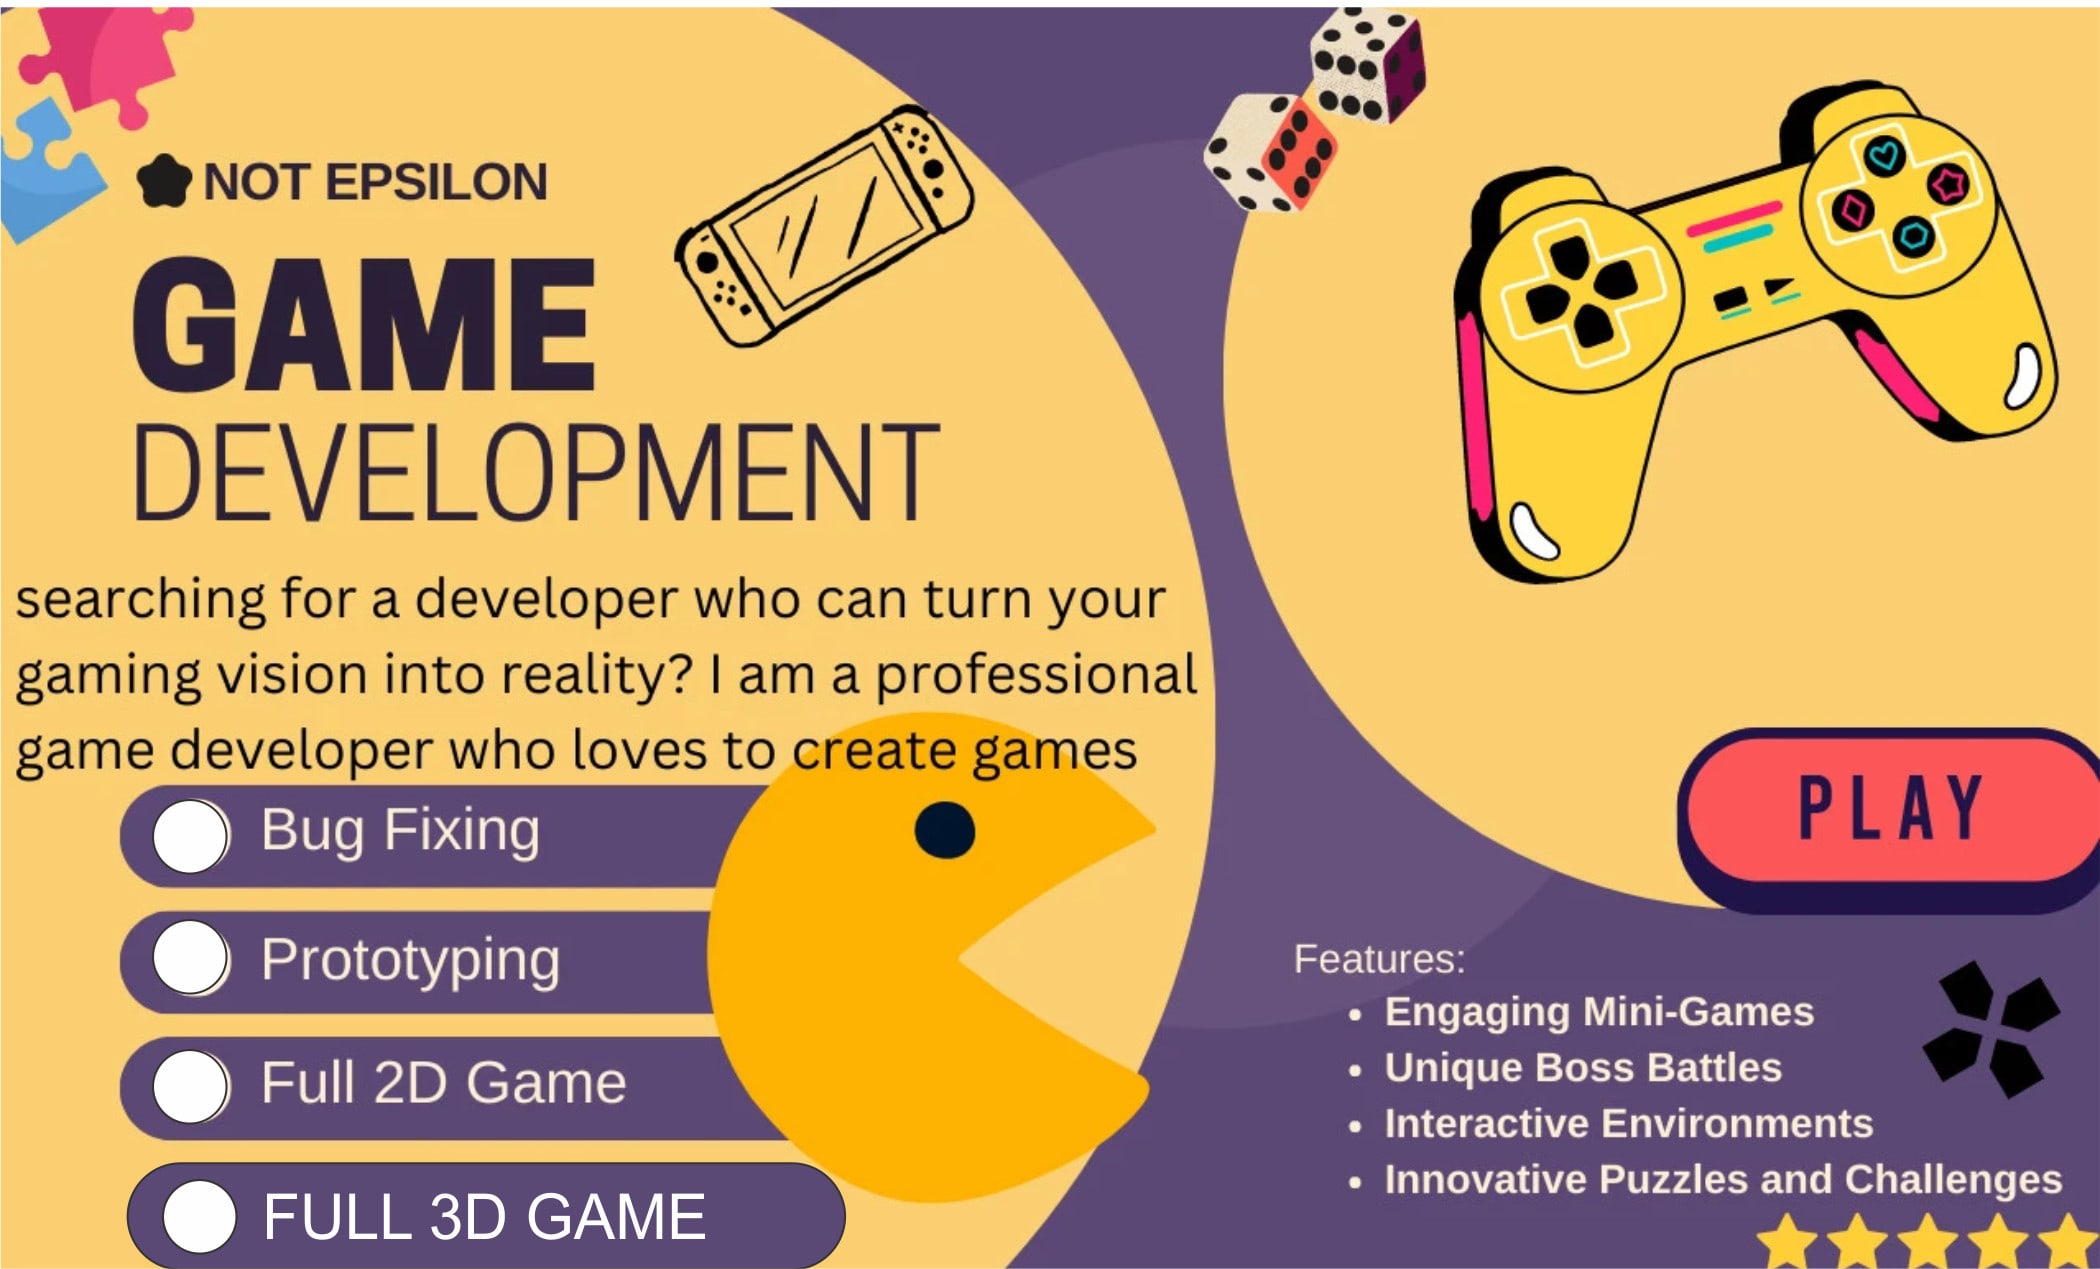 Do unreal engine game development, fix bug, unity, roblox, html5 game, vr game by Allex_zandra Fiverr